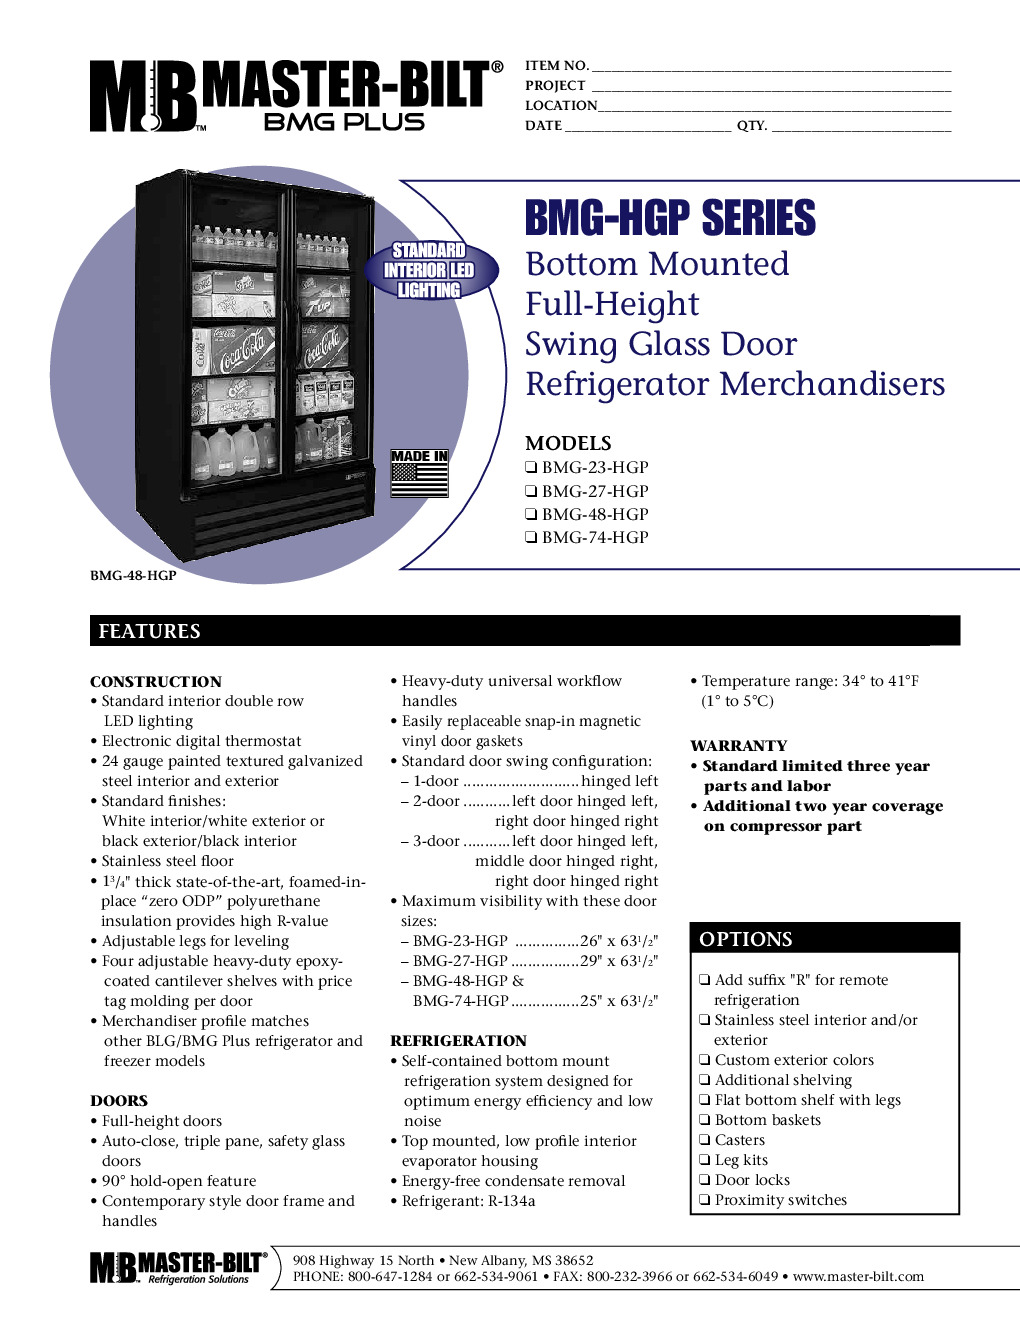 Master-Bilt BMG-74-HGP Merchandiser Refrigerator